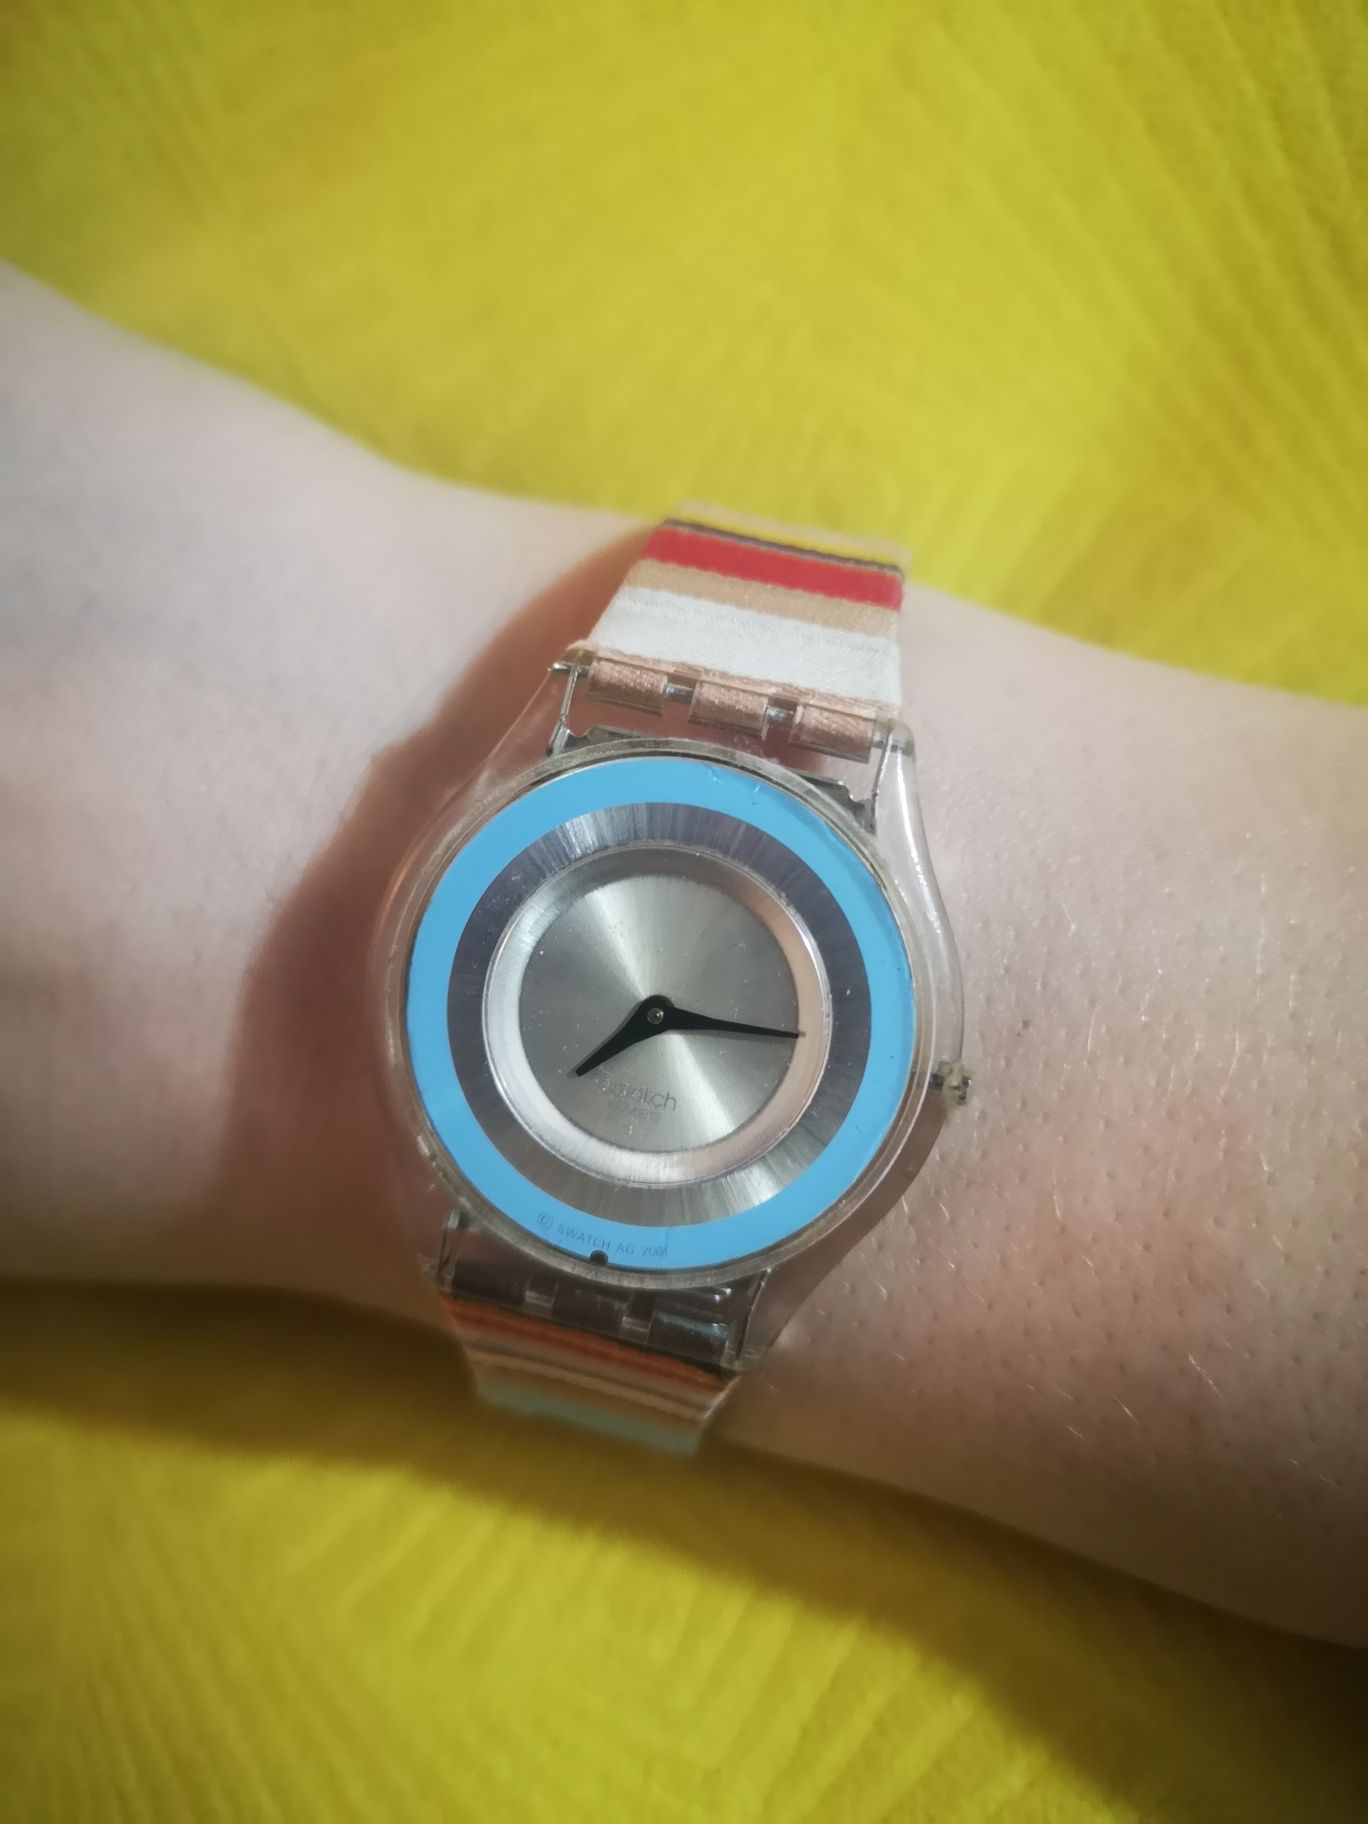 Zegarek swatch skin pastelowy paski błękitny